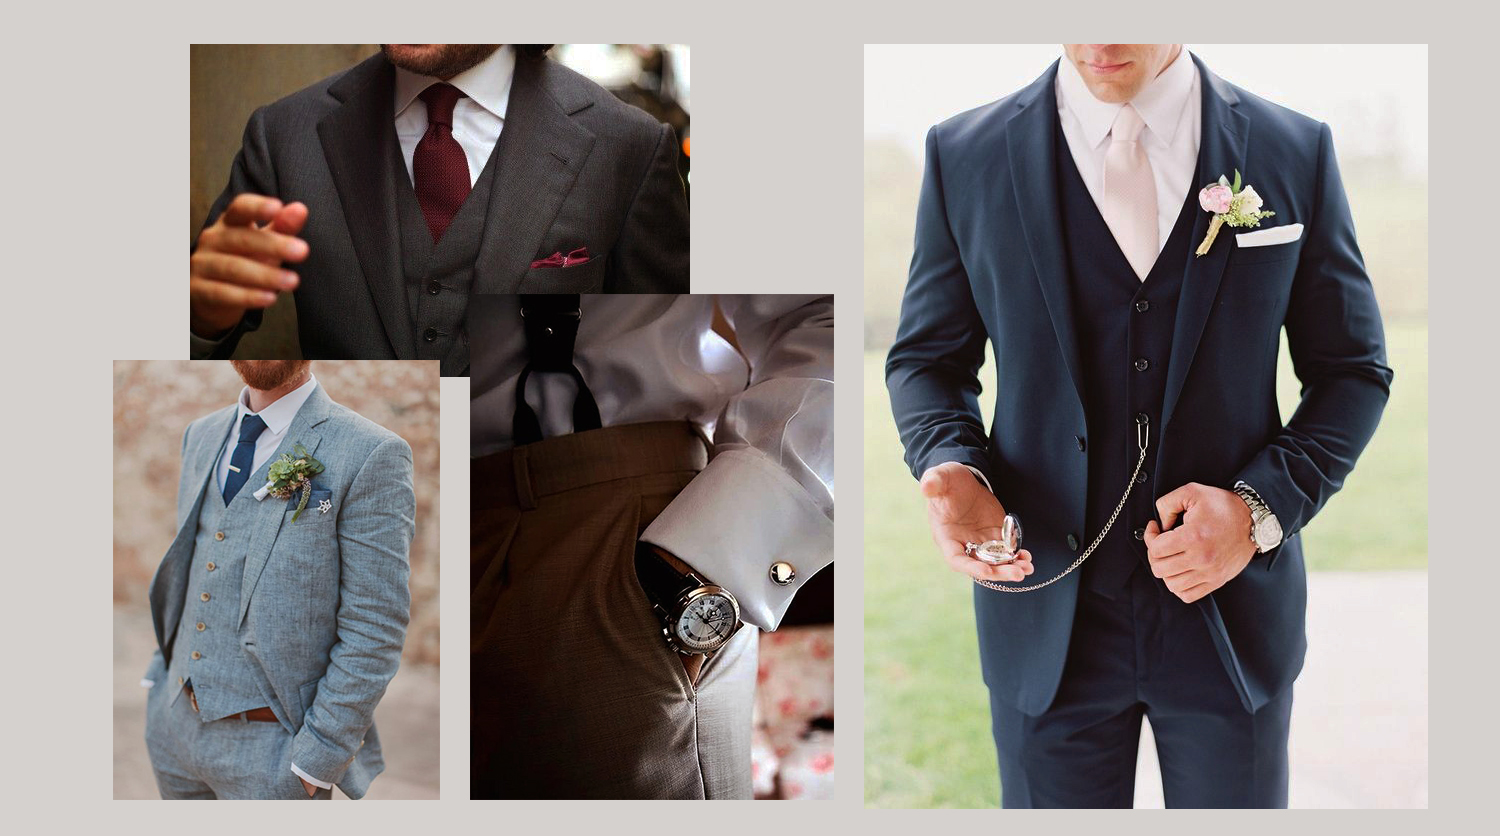 Wedding suit - how grooms do it in Italy?